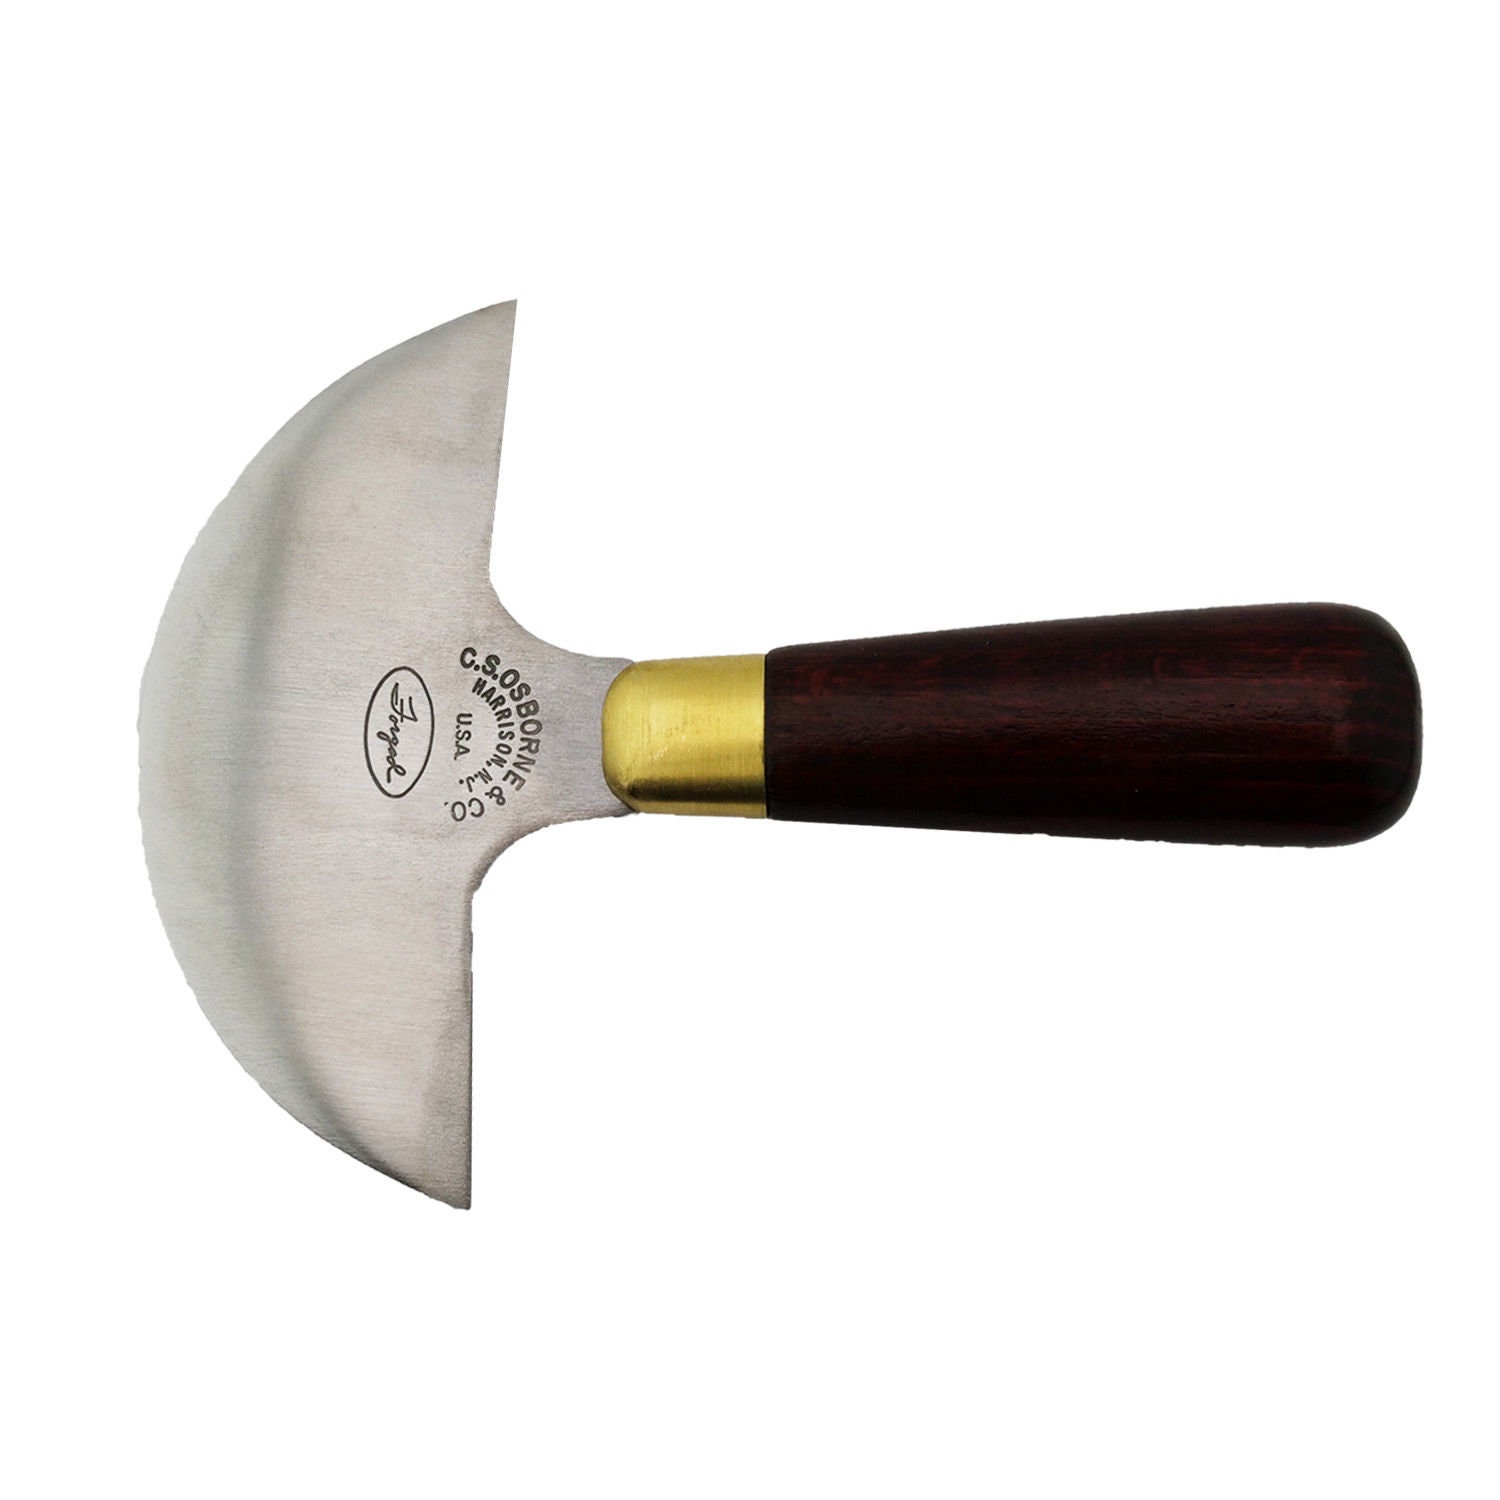  C.S. Osborne 71 Head Knife : Tools & Home Improvement